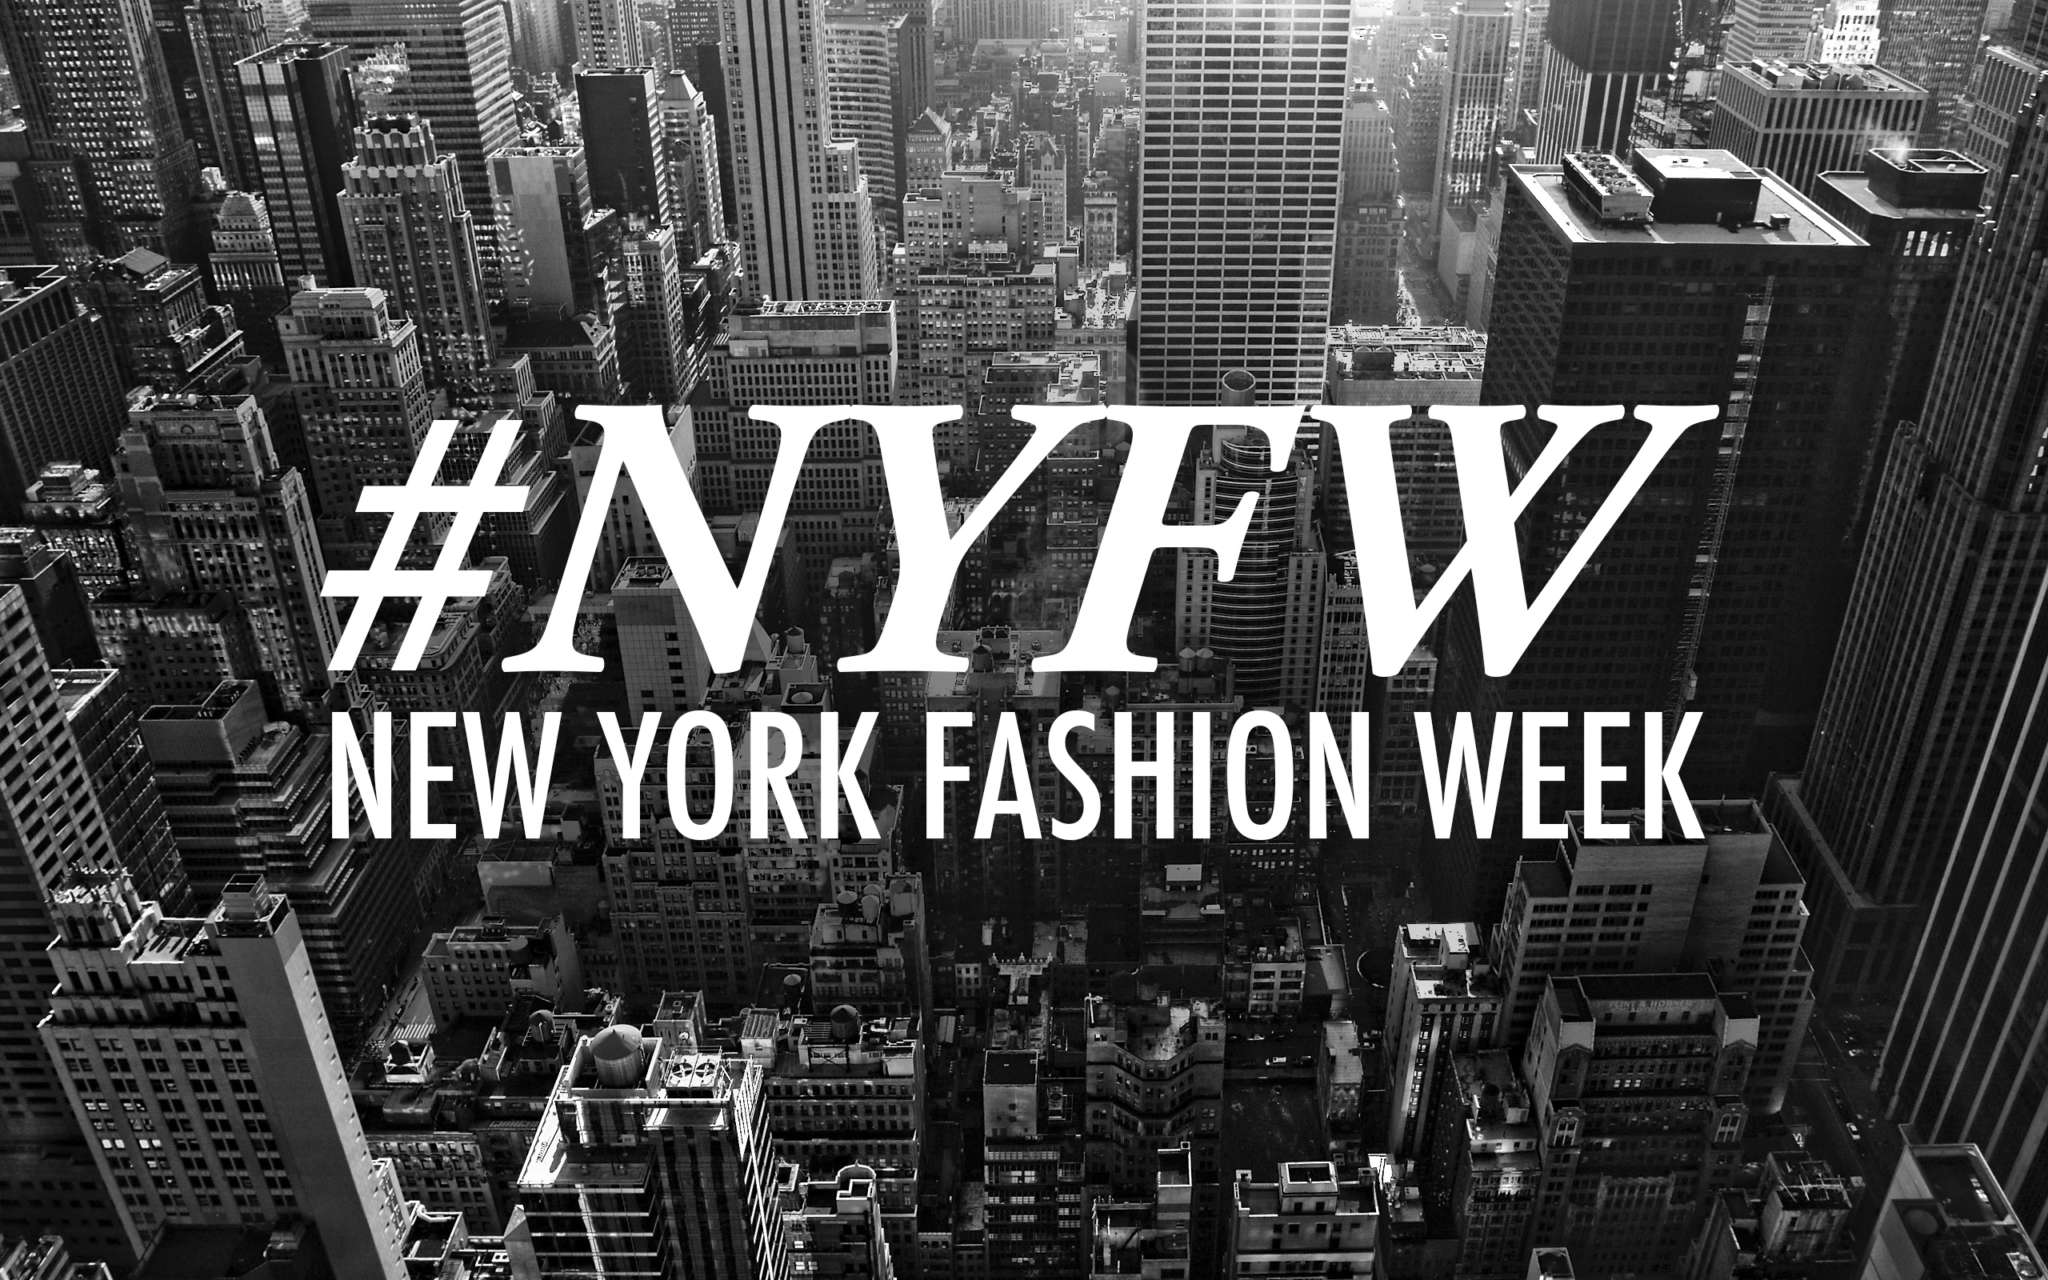 New York Fashion Week The Jack Show